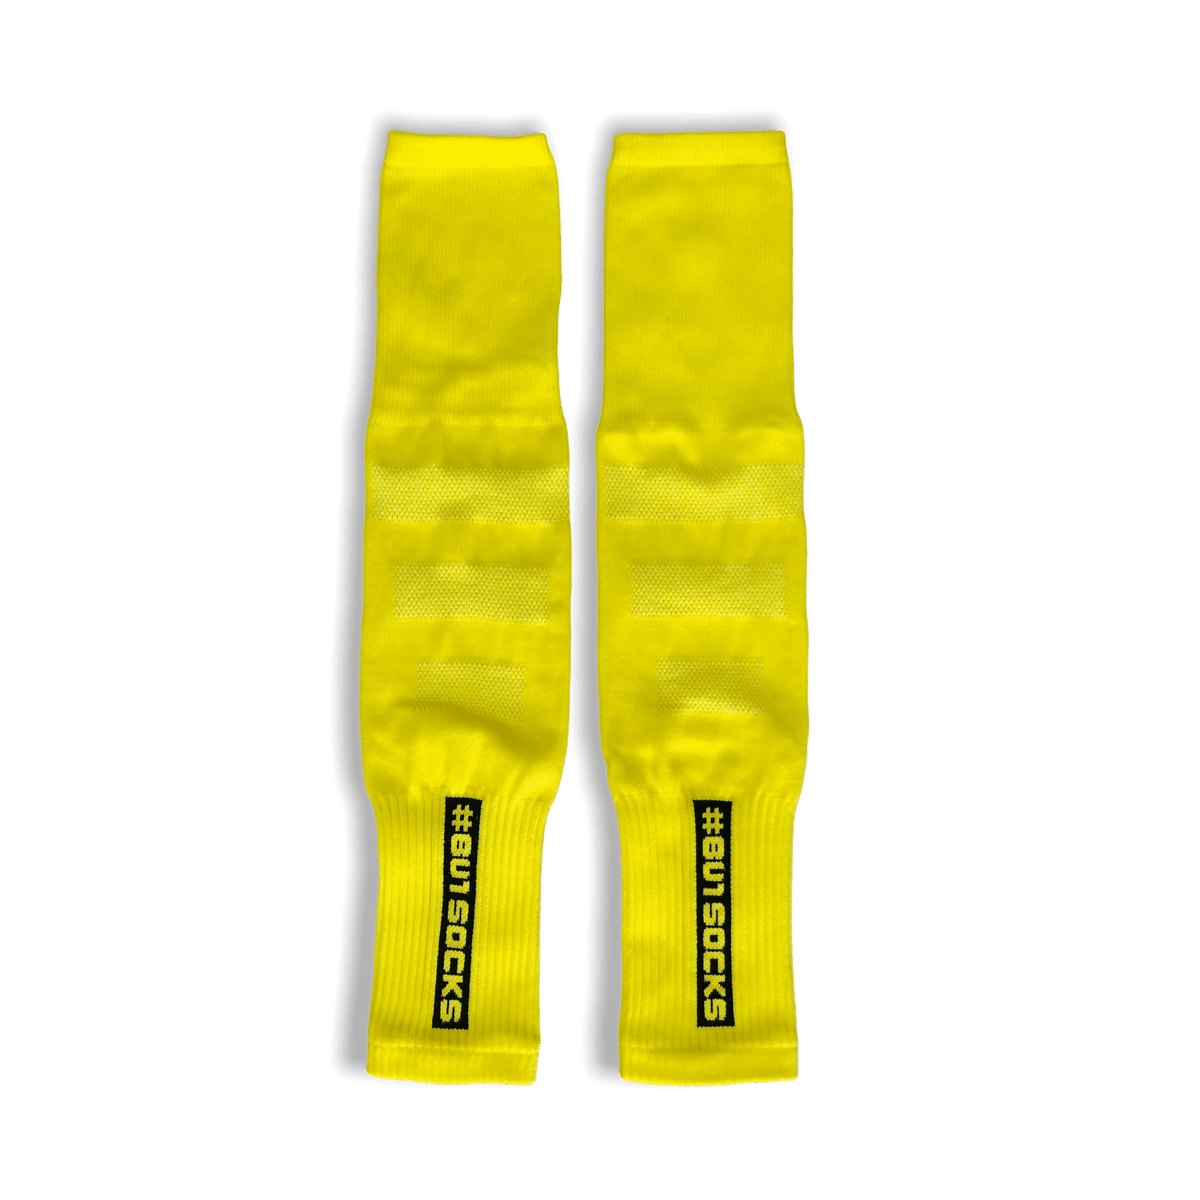 BU1 boots yellow without socks